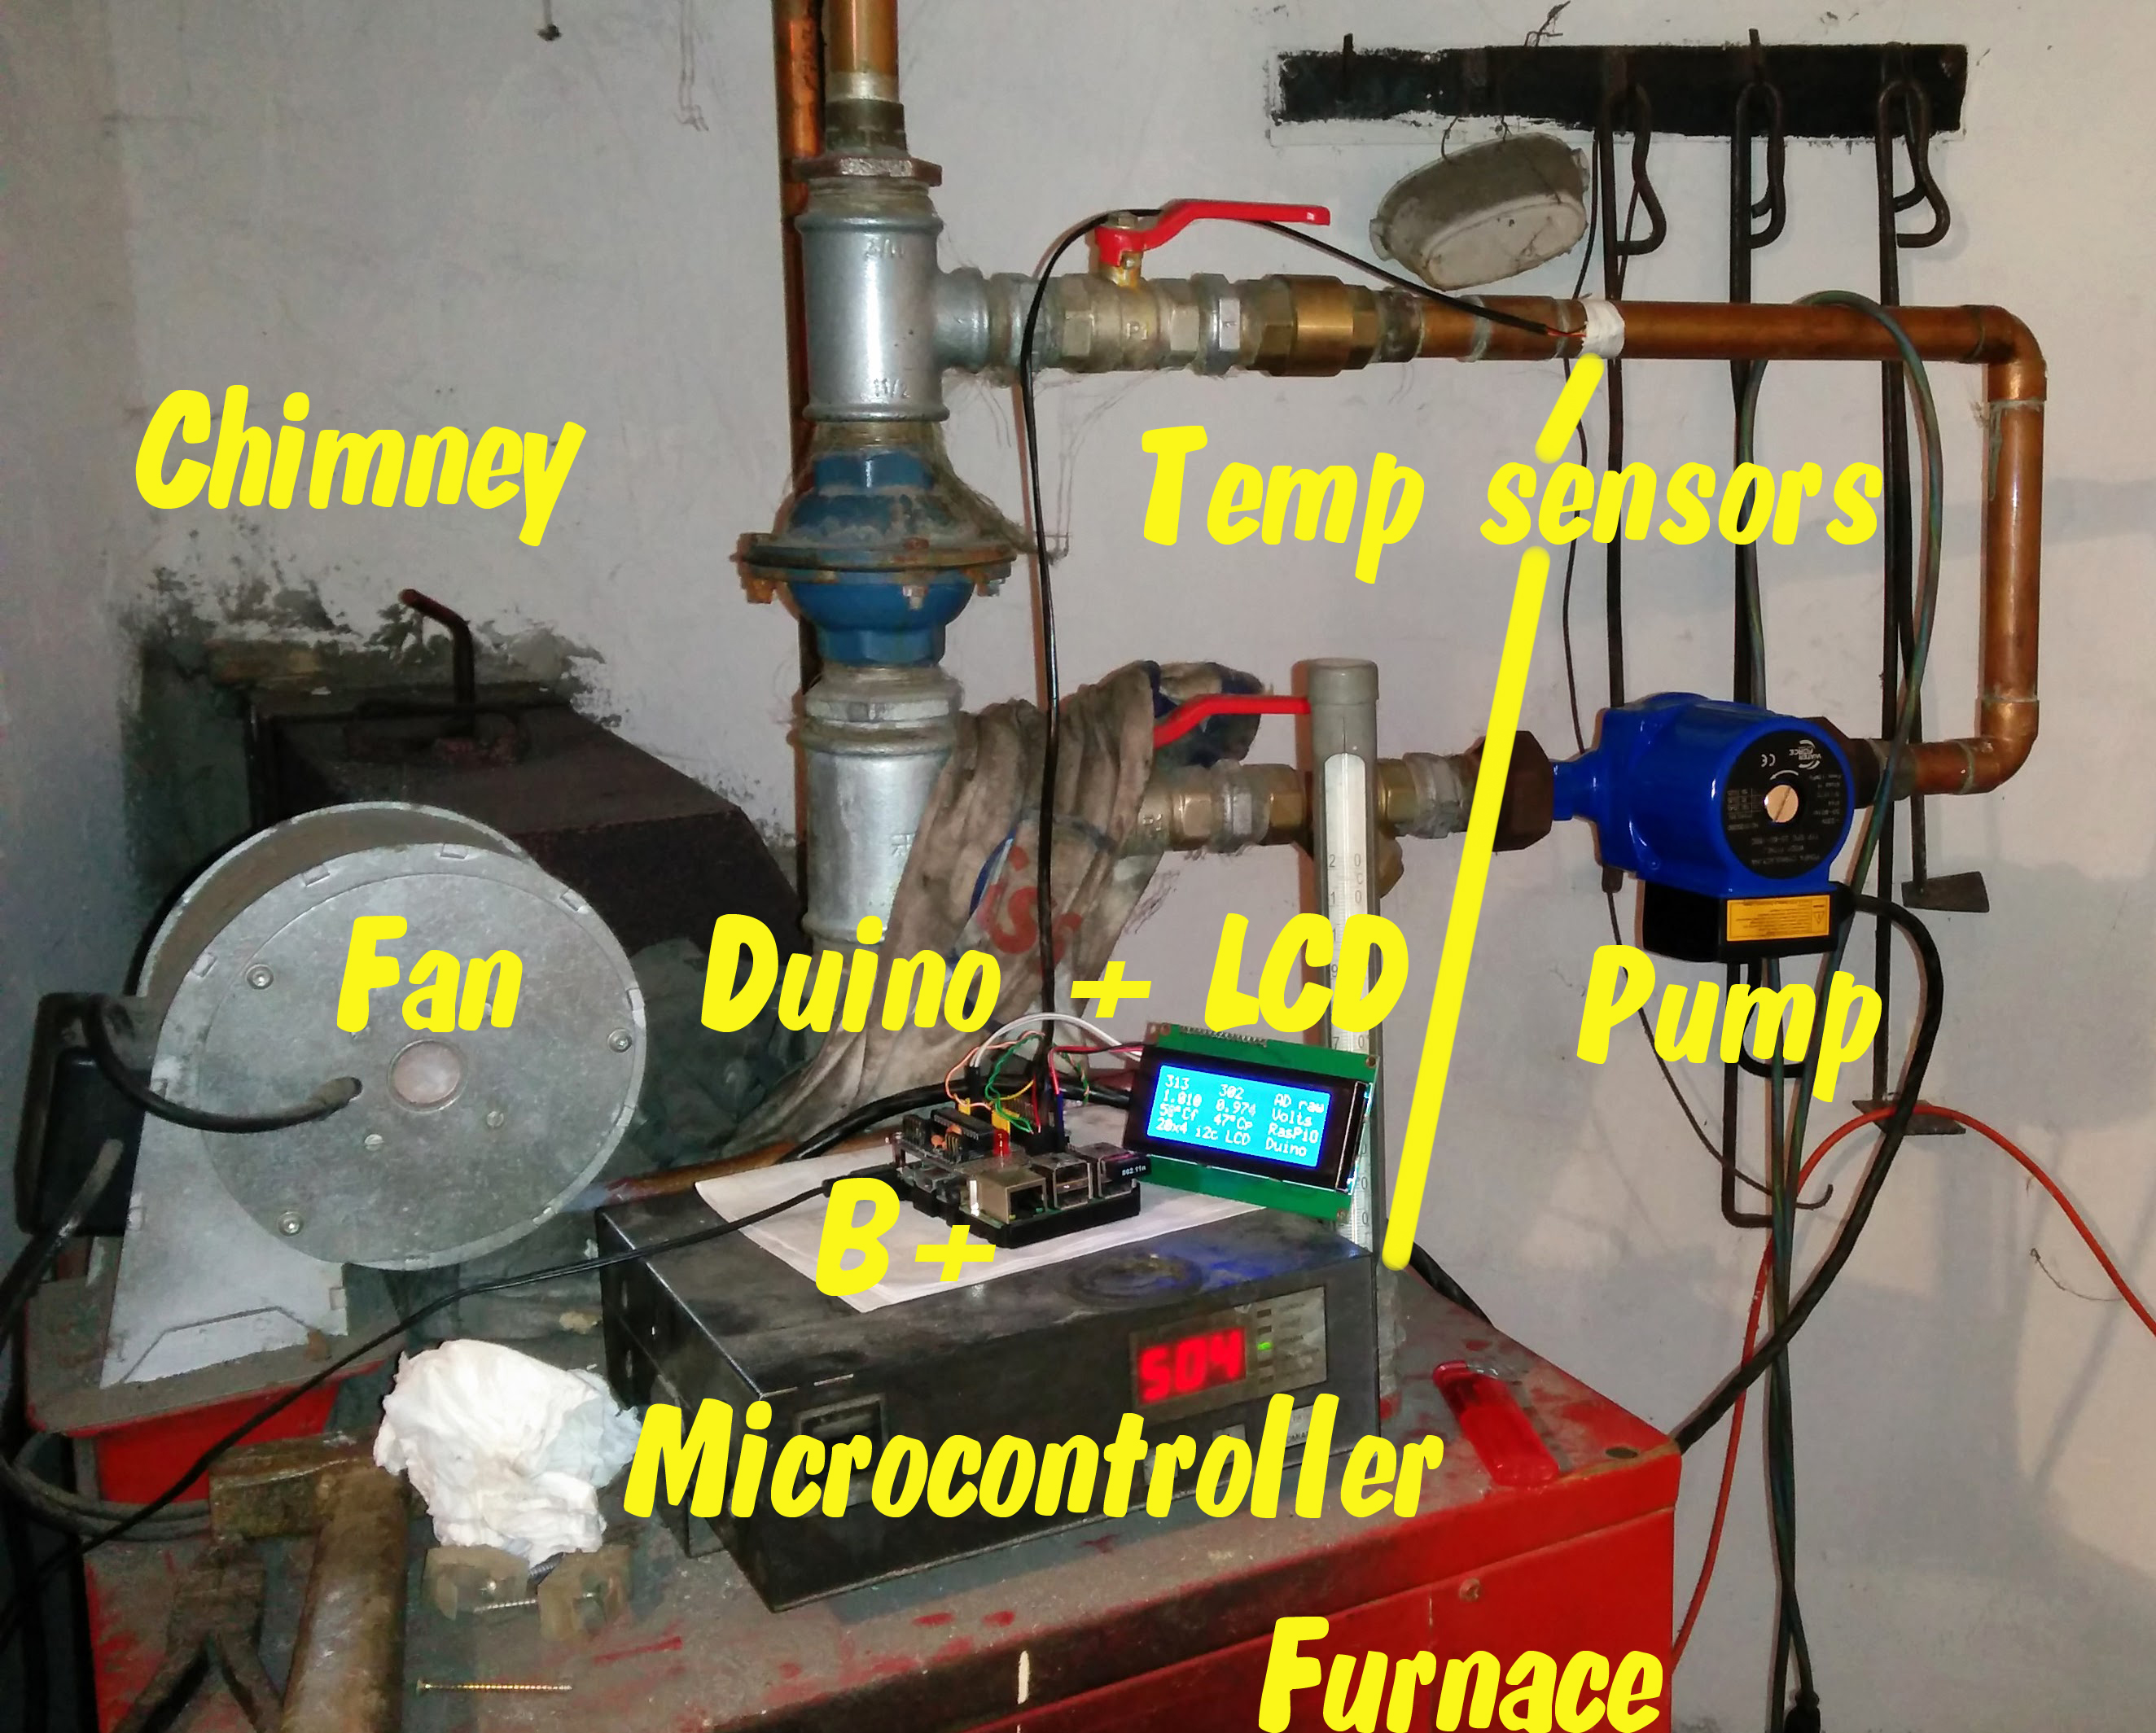 Furnace for steam heat фото 70